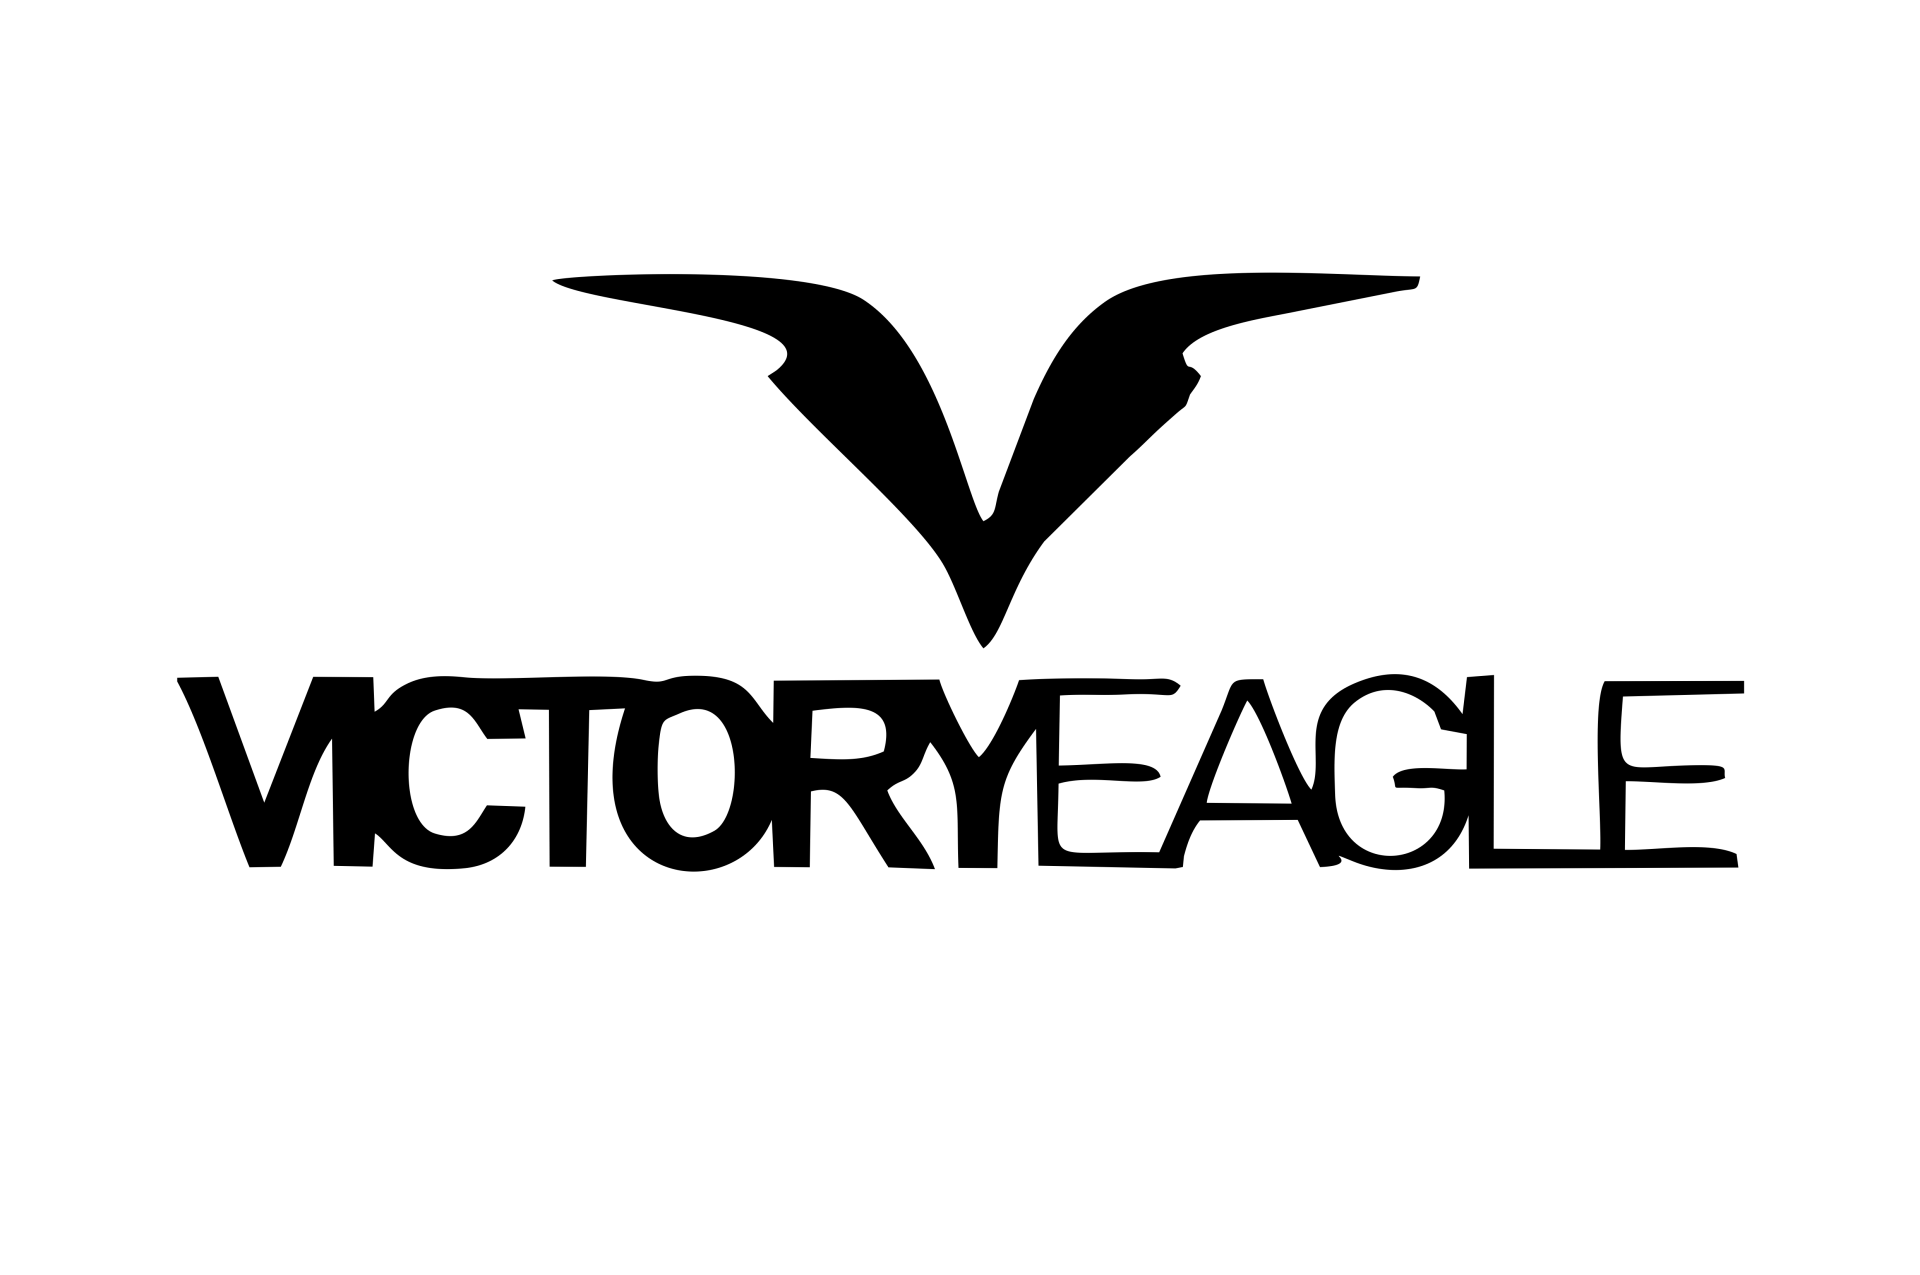 Victor Eagle : Brand Short Description Type Here.